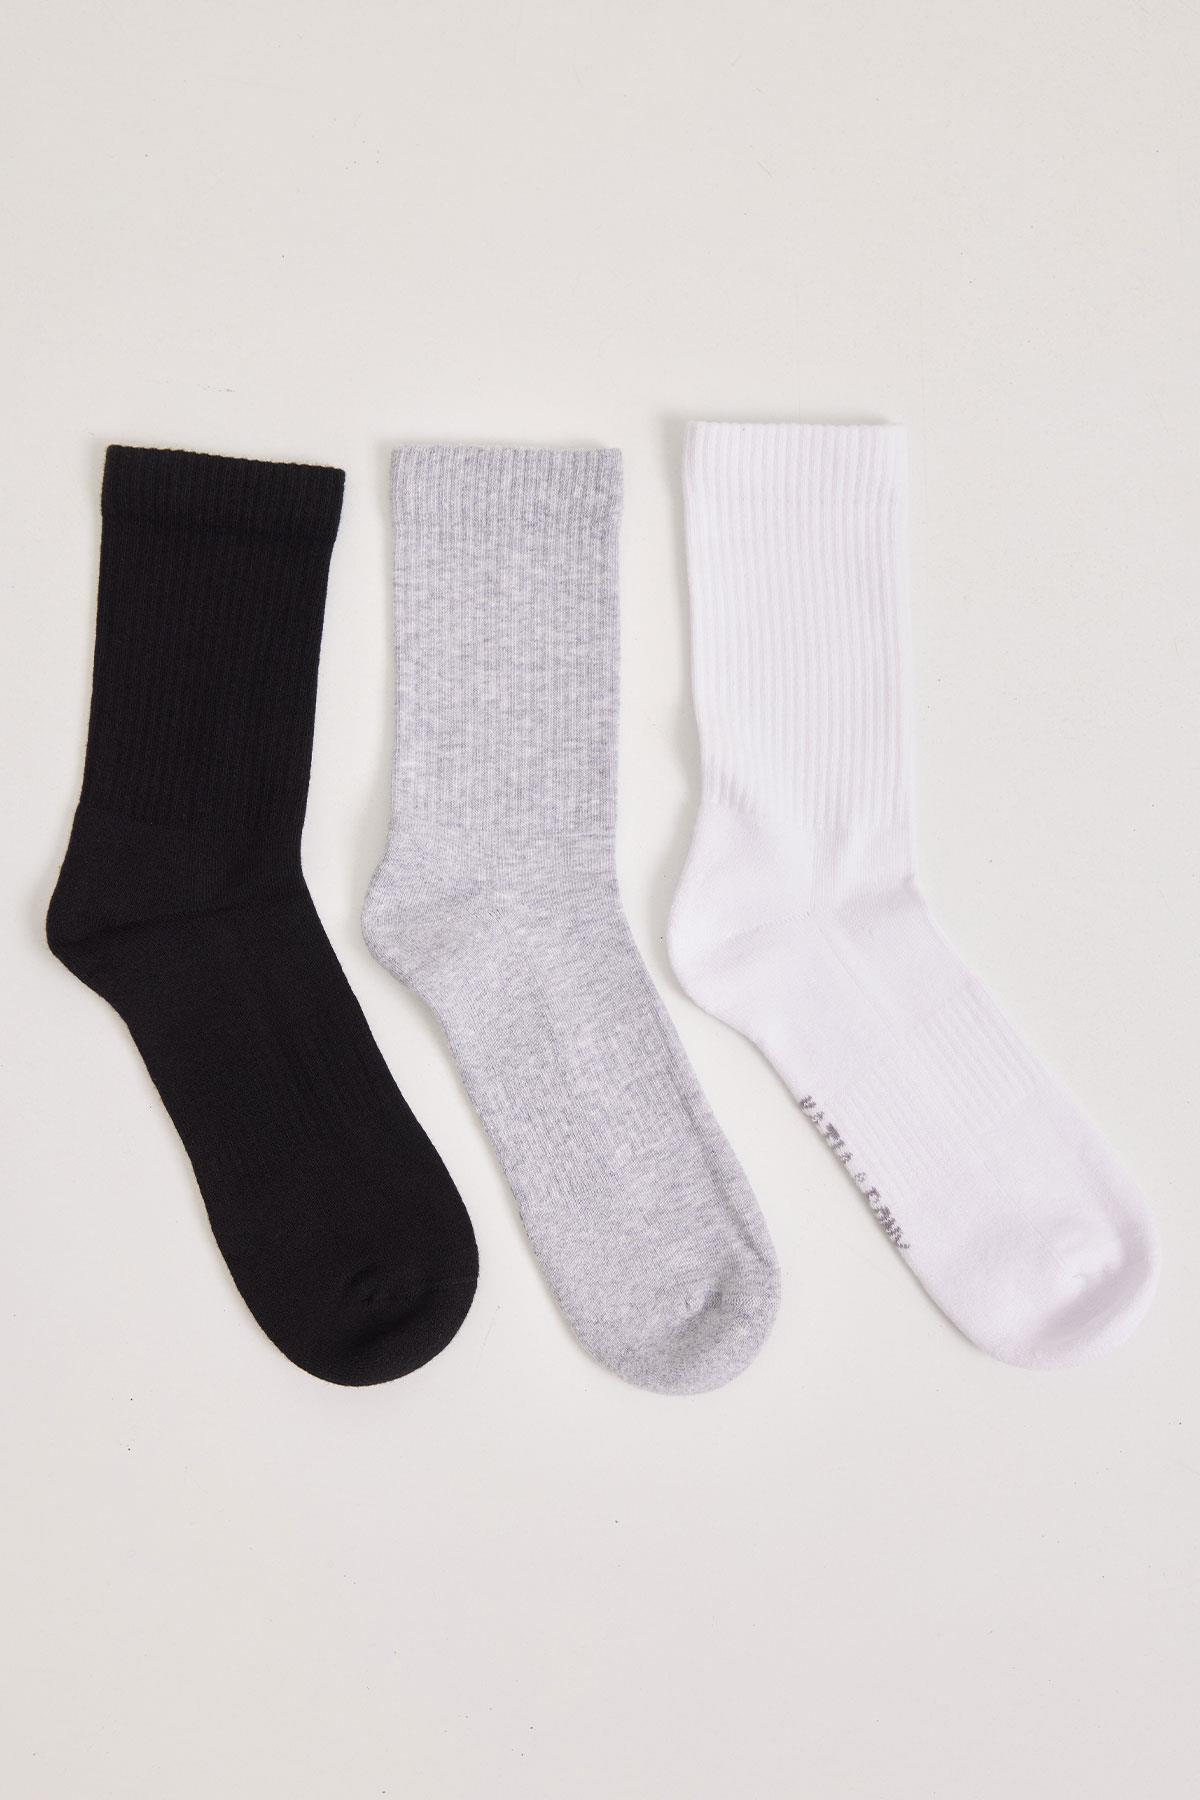 3 lü Paket Pamuklu Spor Çorap Siyah/Beyaz/Gri